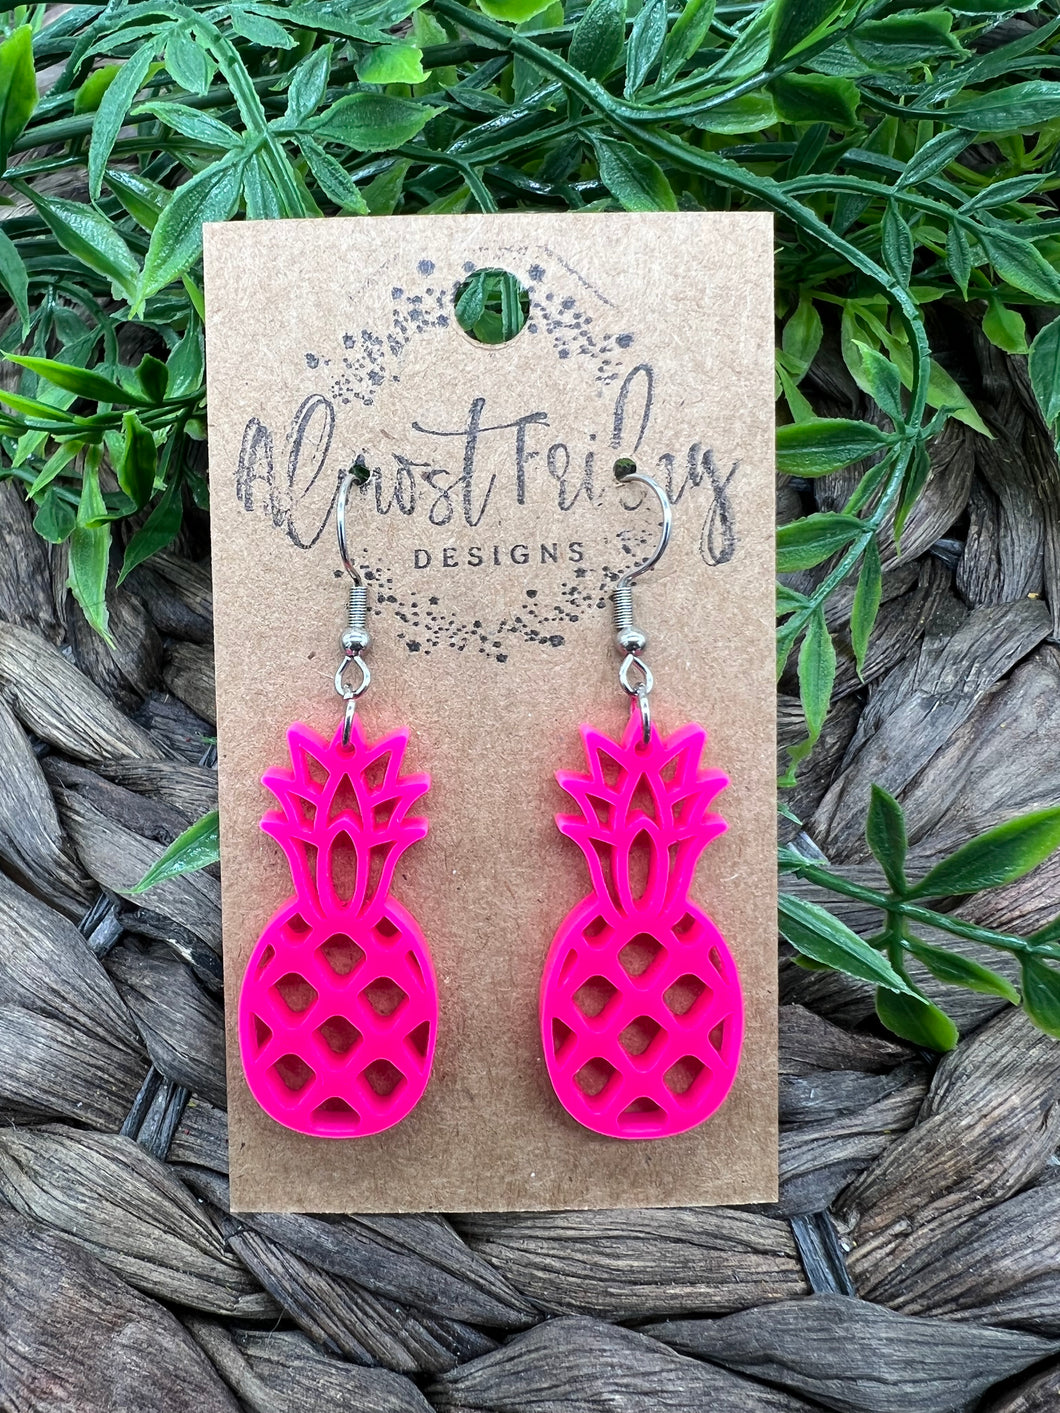 Acrylic Earrings - Pineapple - Neon - Pink - Tropical - Summer - Spring - Statement Earrings